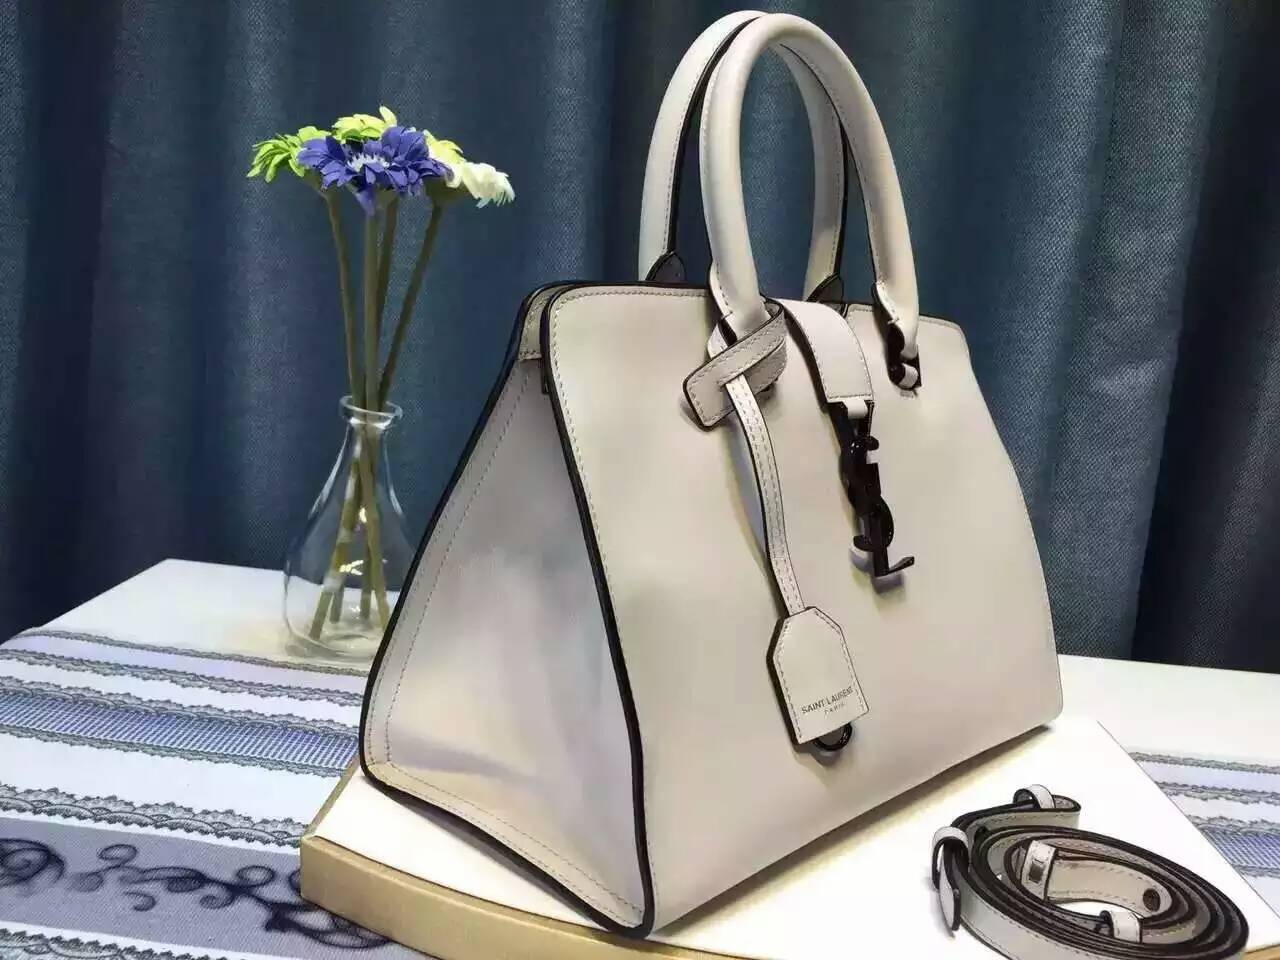 S/S 2016 New Saint Laurent Bag Cheap Sale-Saint Laurent Small Monogram Cabas Bag in Dove White and Black Leather - Click Image to Close